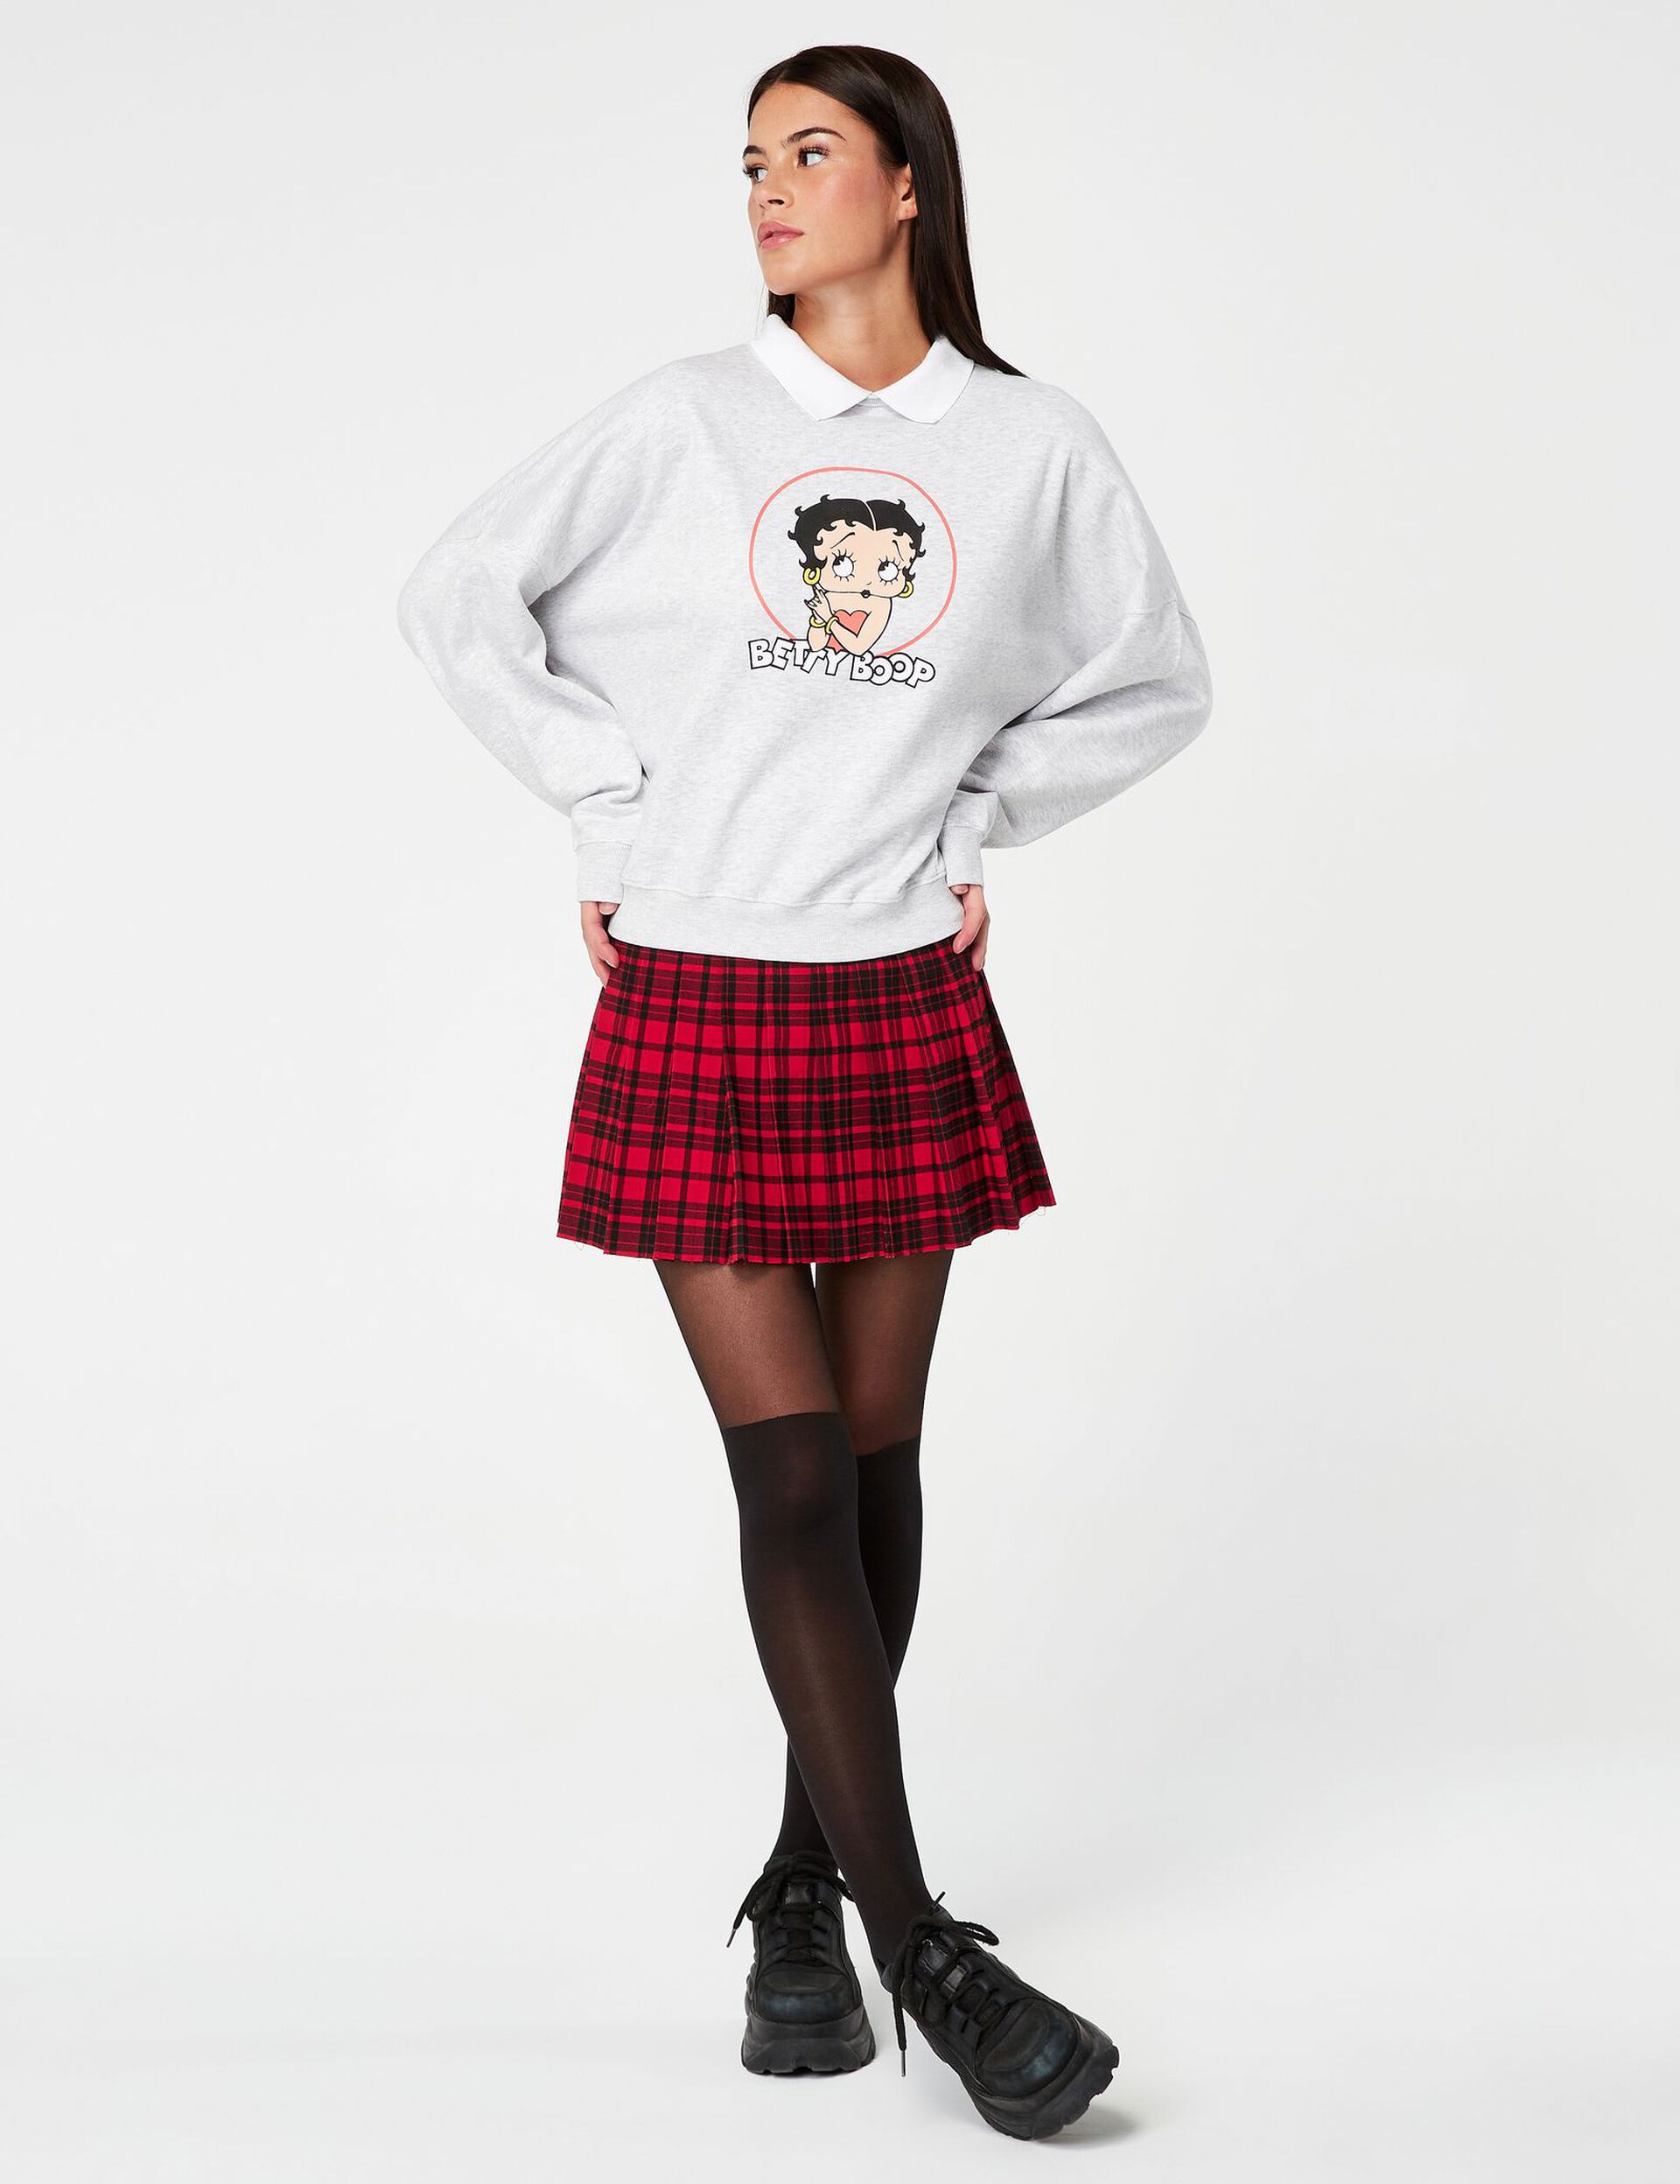 Betty Boop sweatshirt